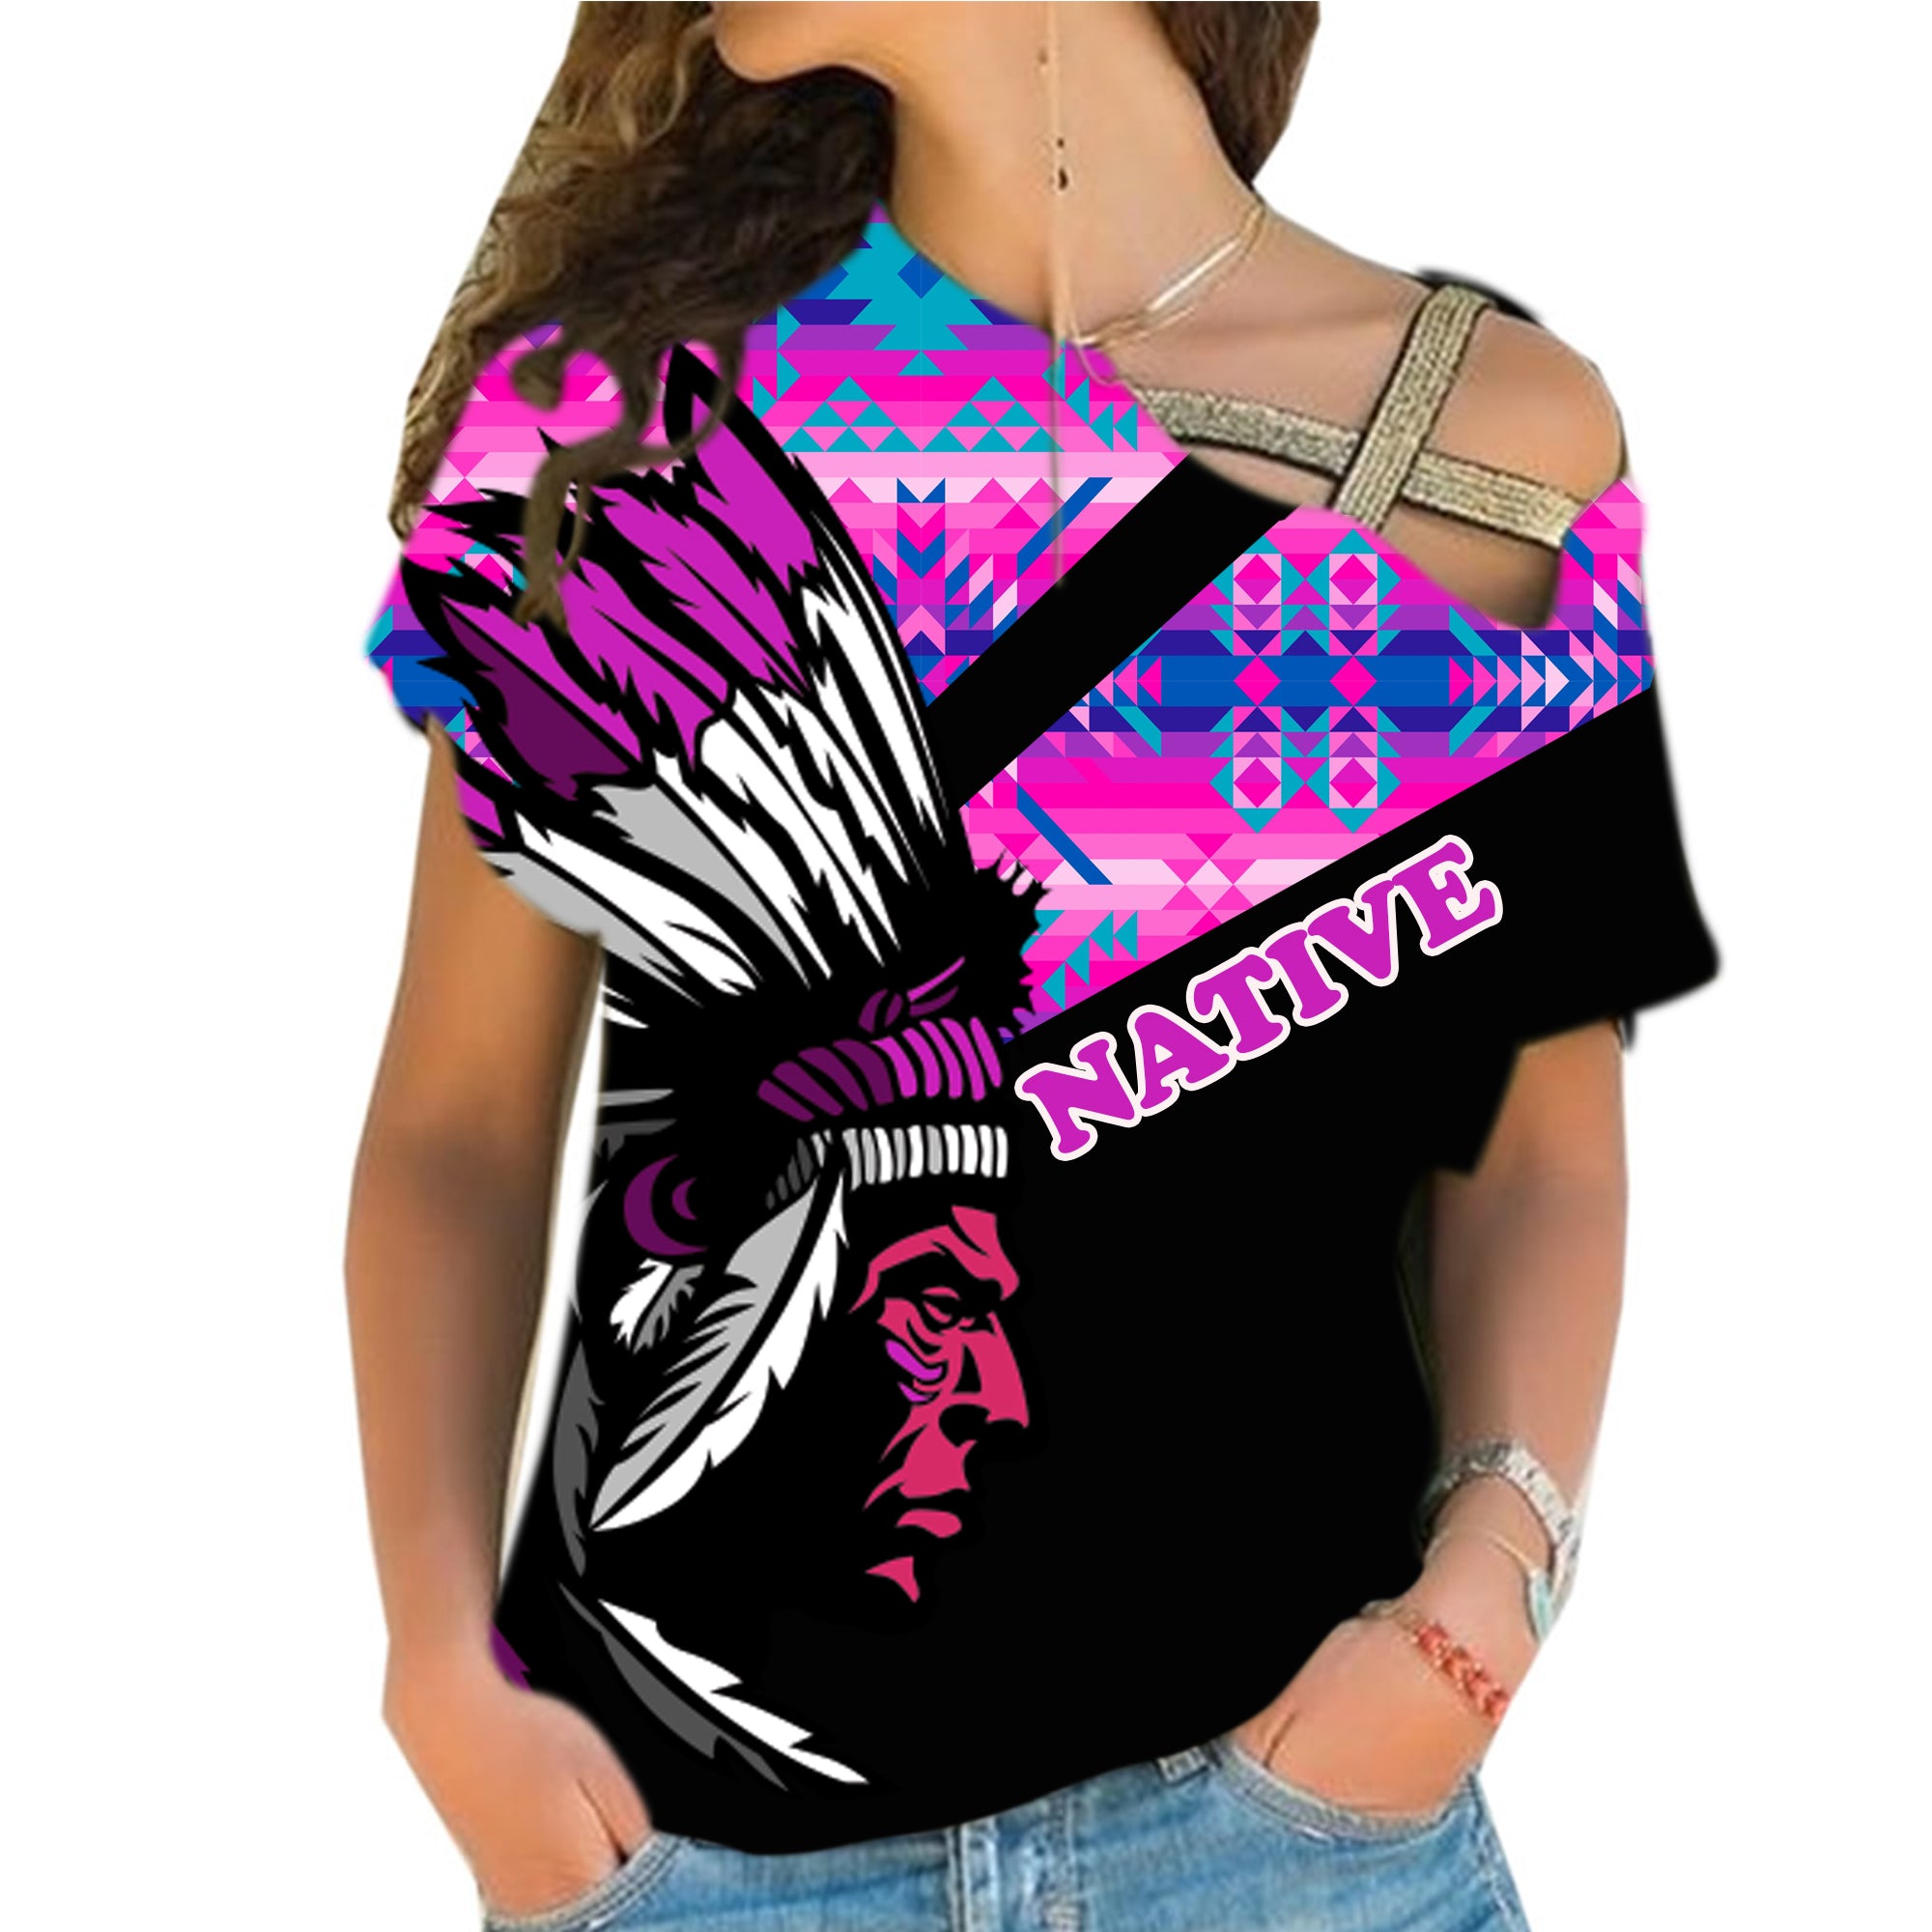 Powwow StoreCRS0001213 Native American Cross Shoulder Shirt